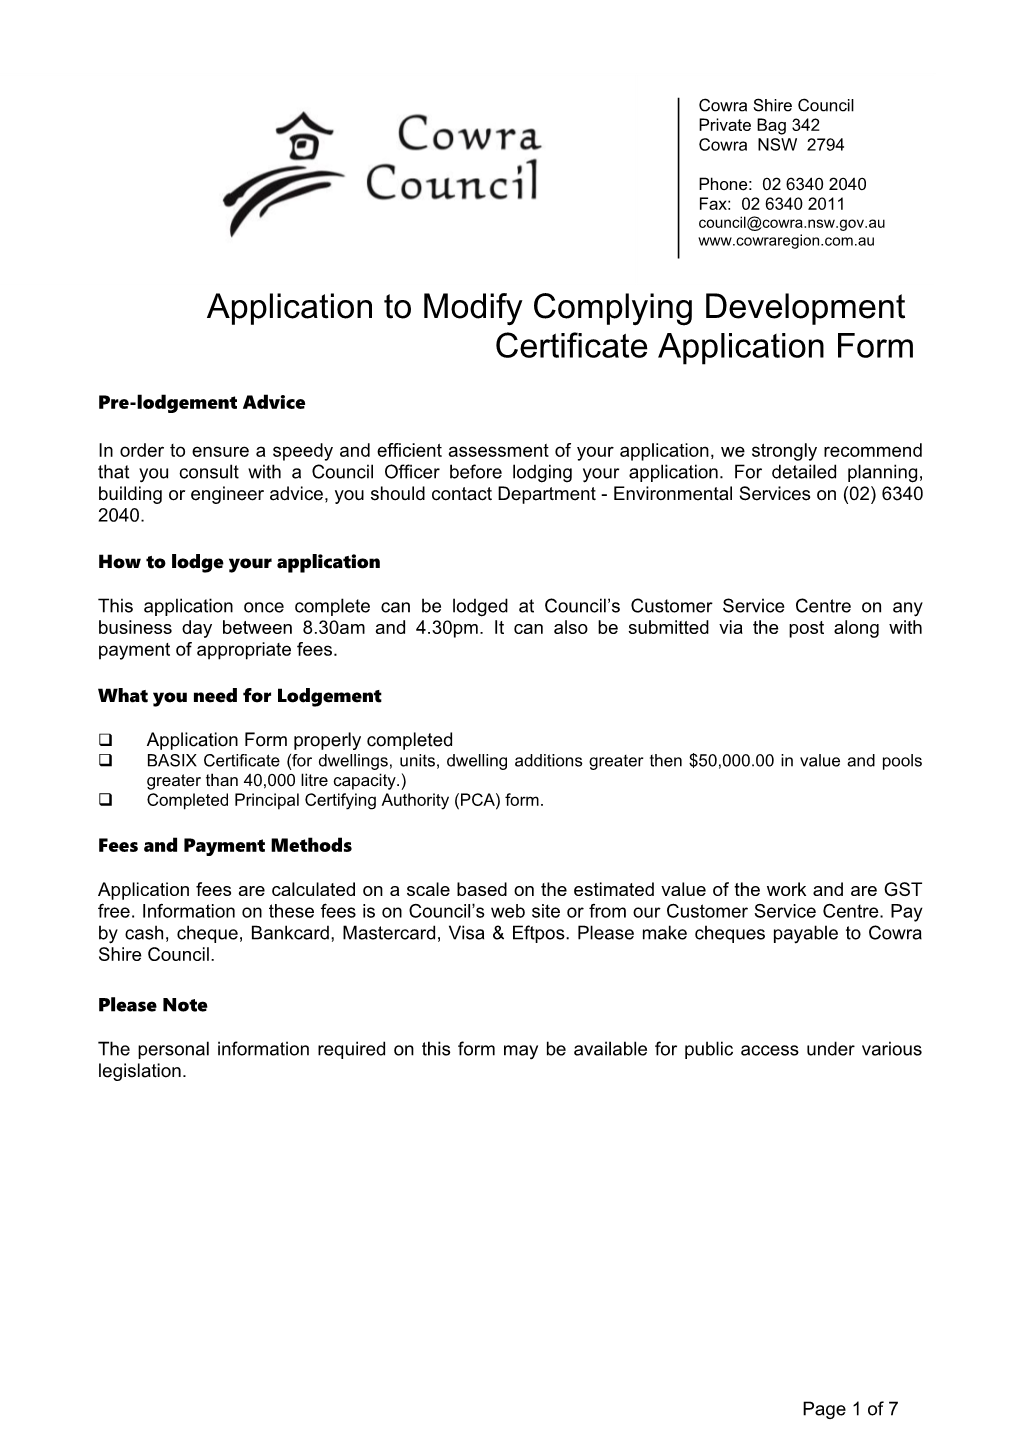 Application to Modify Complying Development